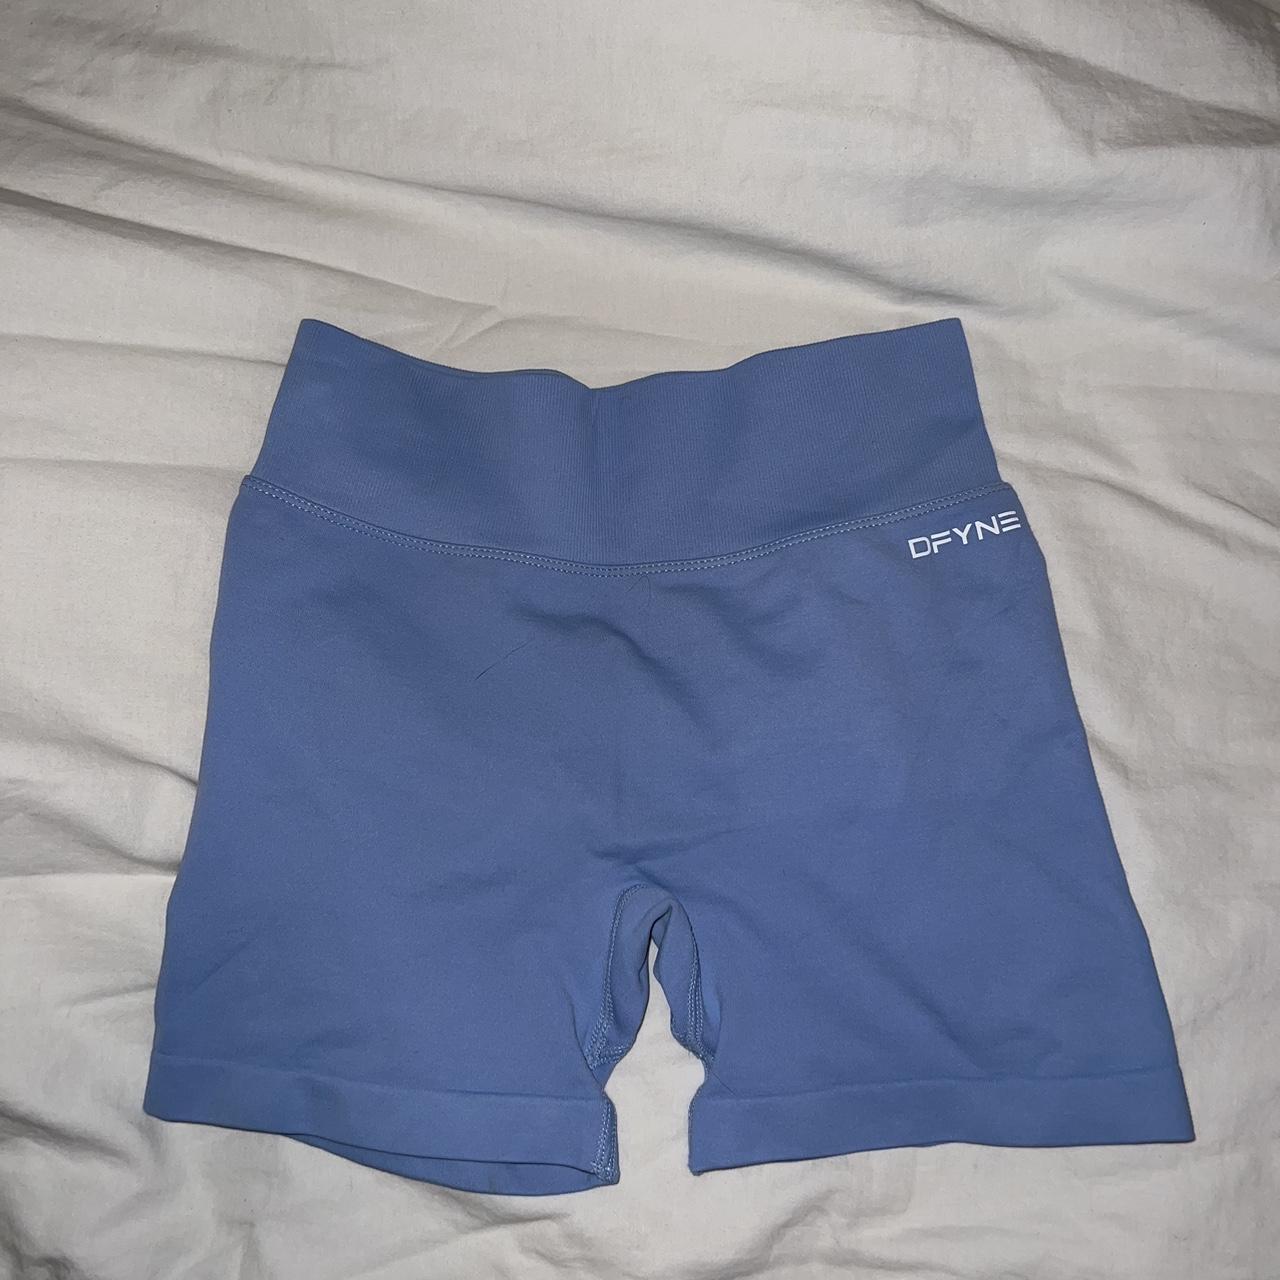 blue dfyne shorts - size small - worn 3 times - Depop